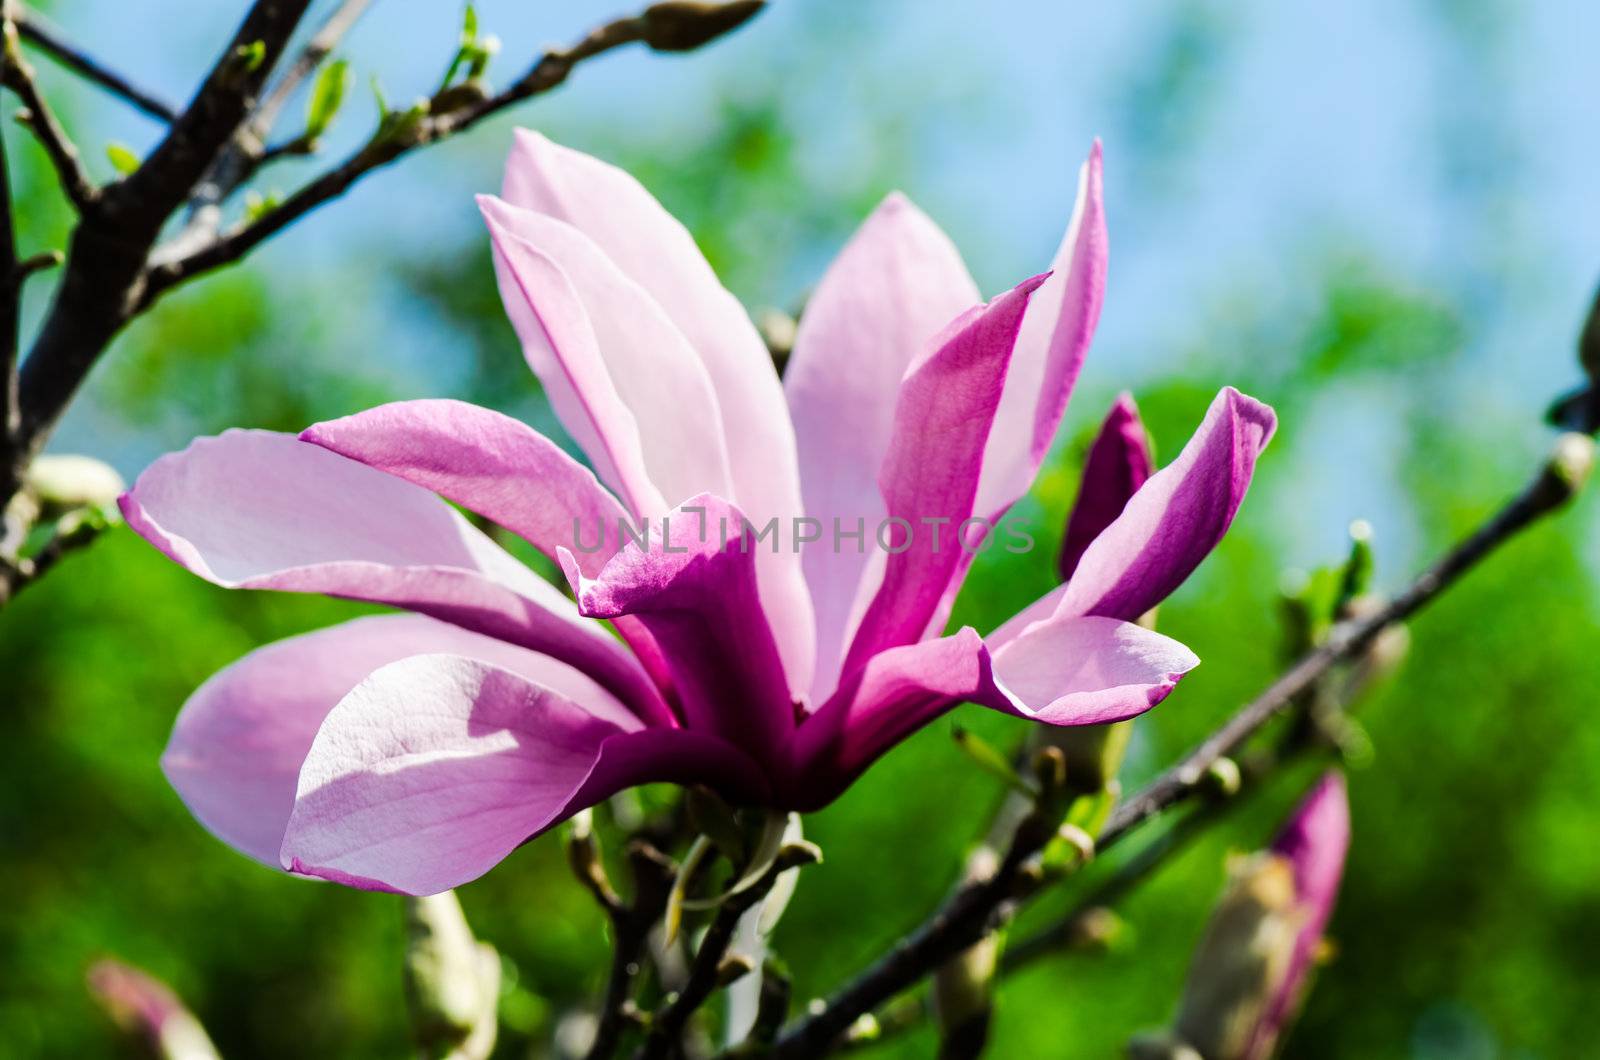 Blossom magnolia in the spring garden by Nanisimova